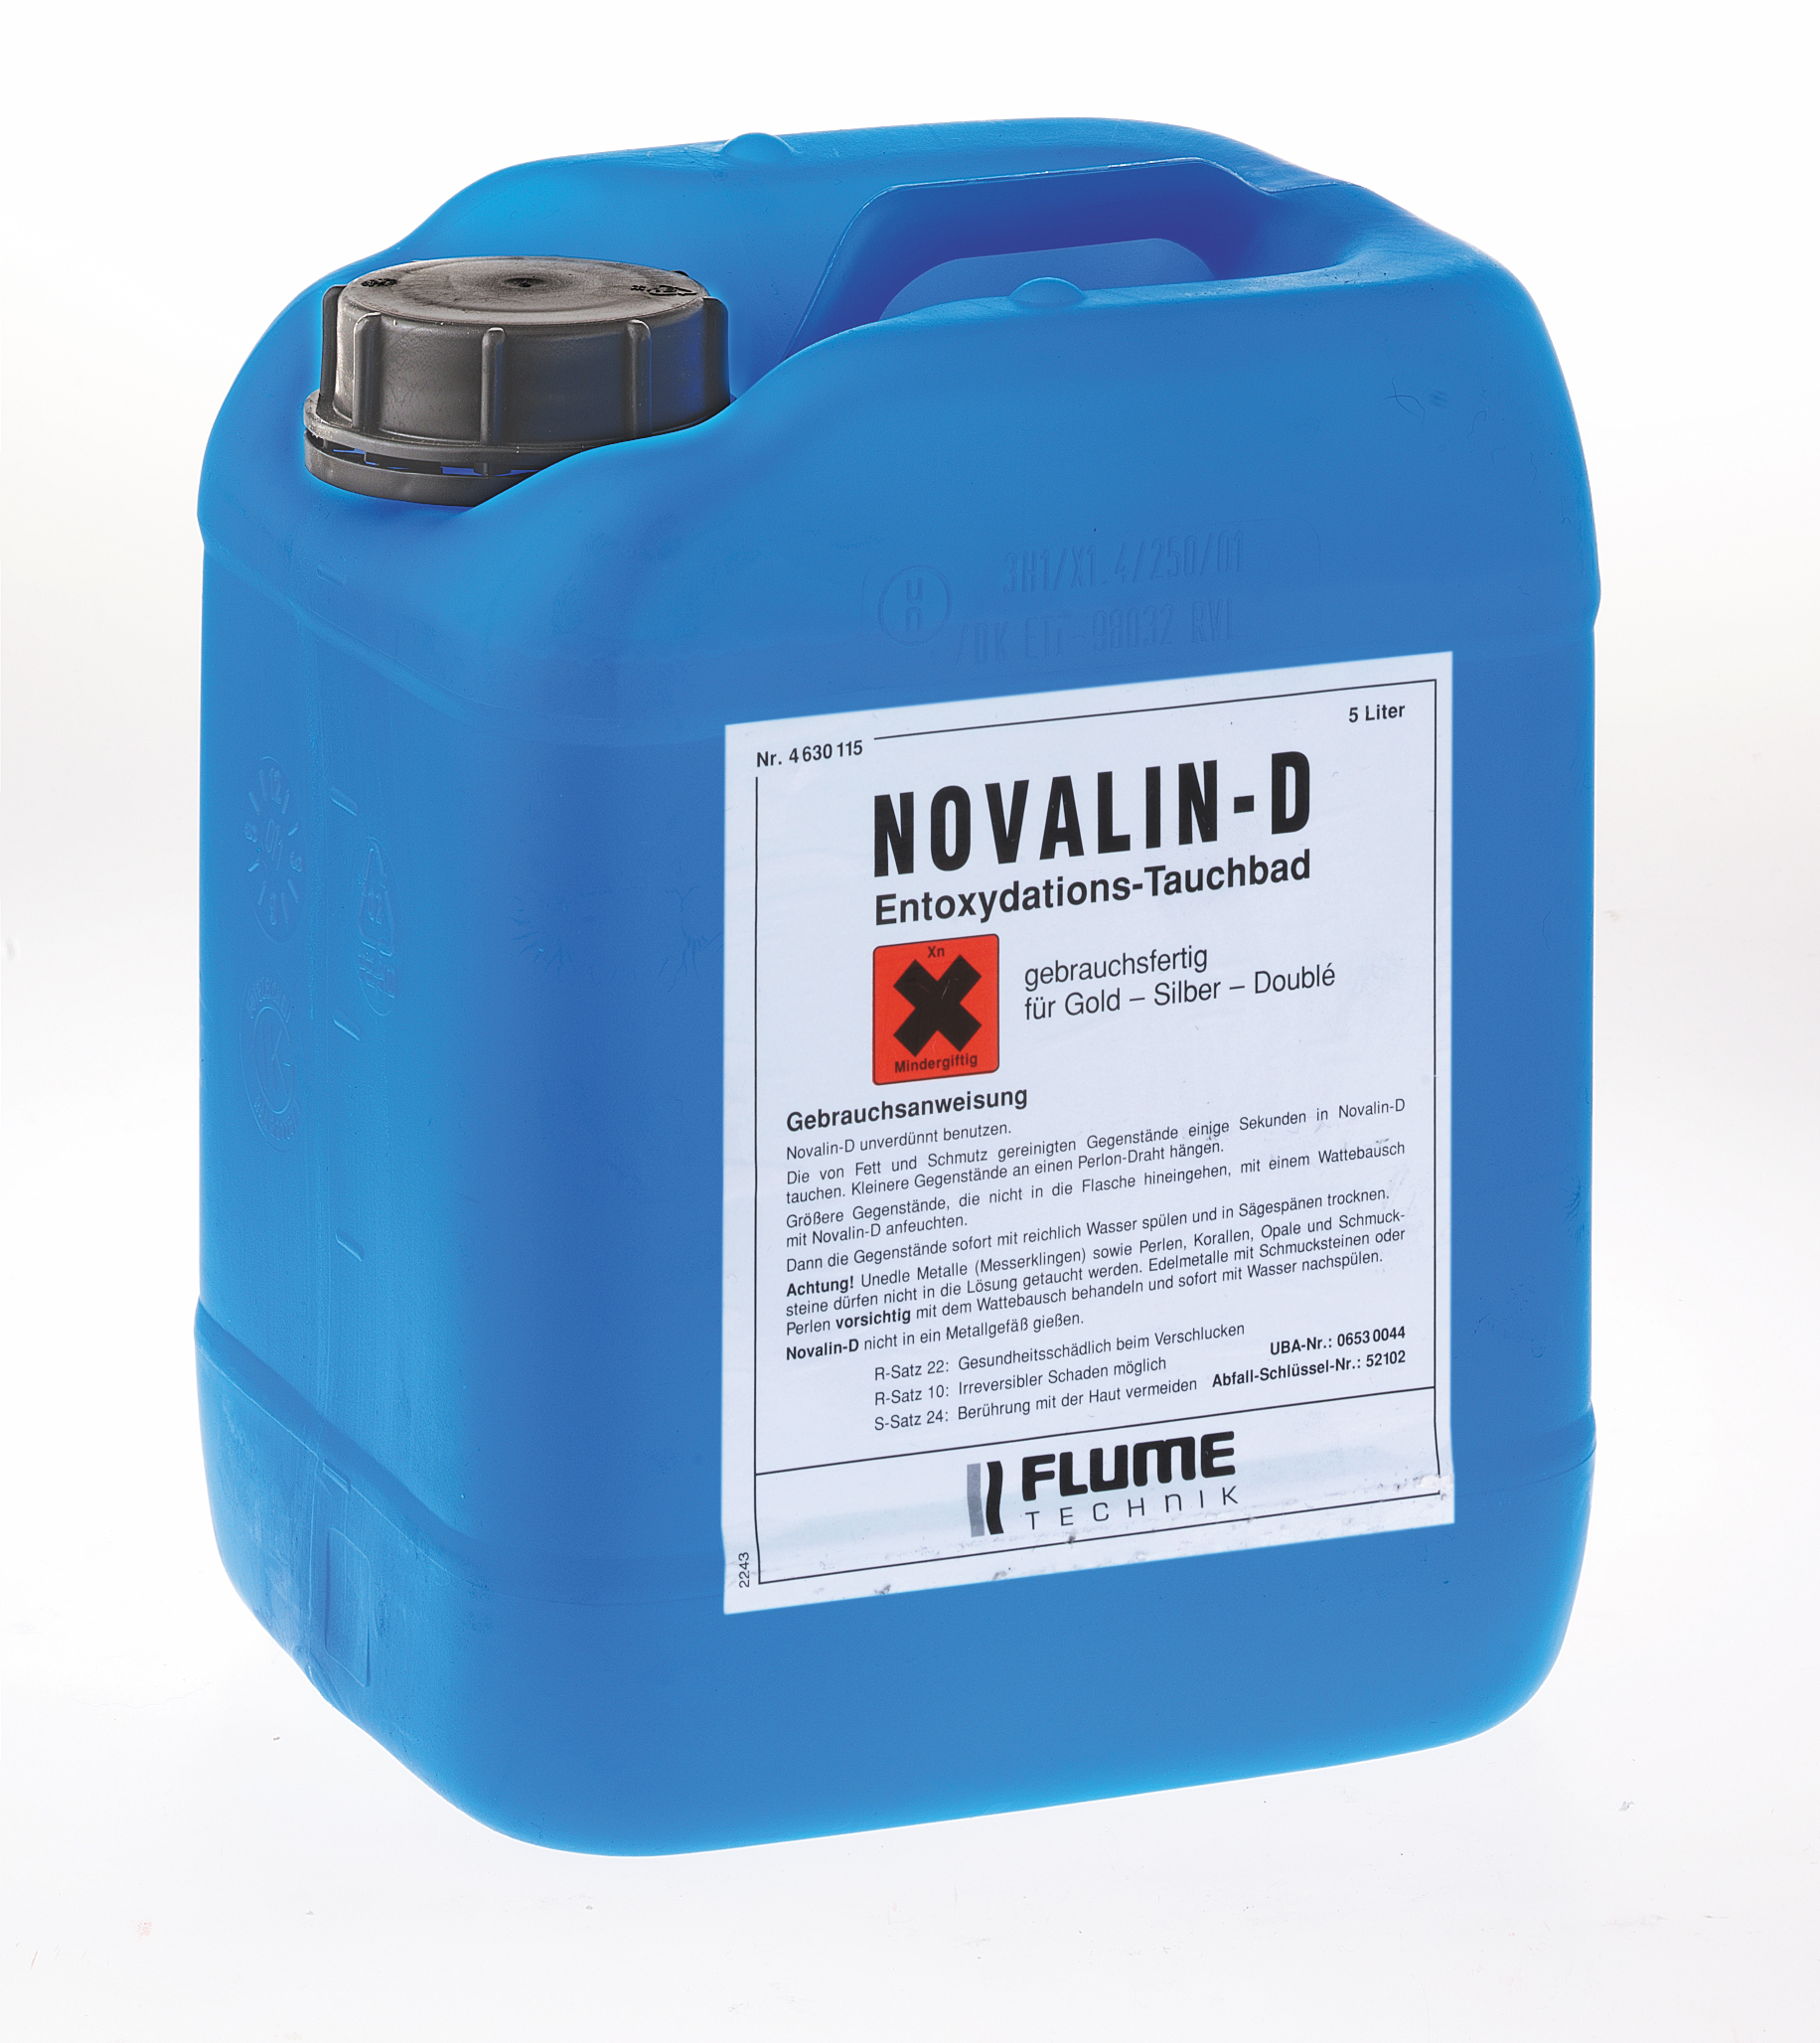 Novalin-D 5 Liter